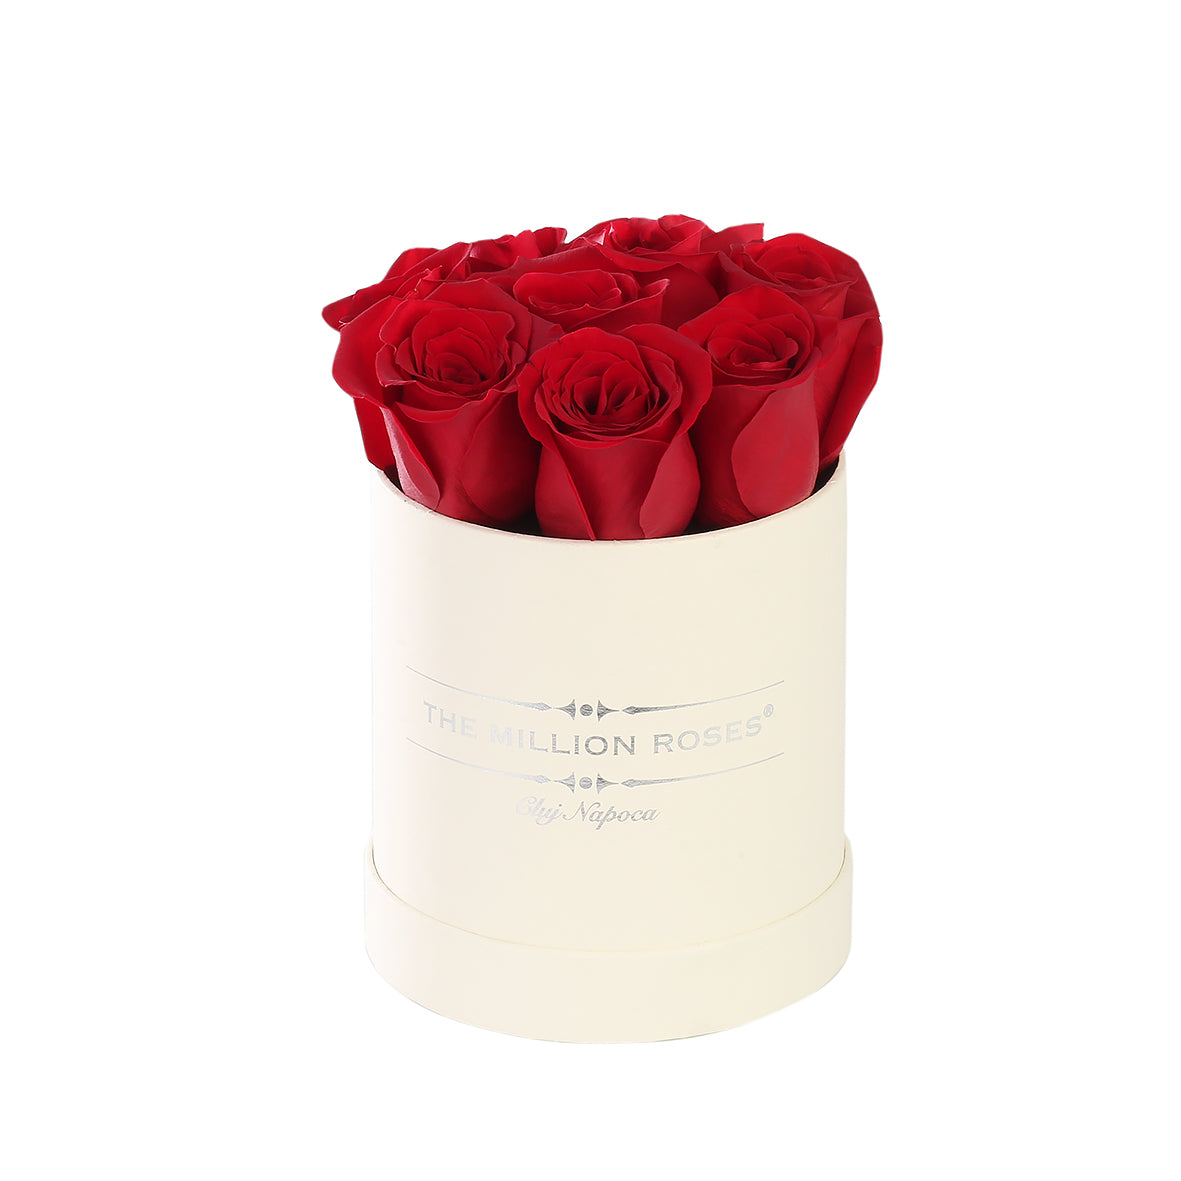 buchete trandafiri in cutie, buchete trandafiri naturali in cutie, trandafiri naturali, trandafiri rosii, trandafiri in cutie alba, 